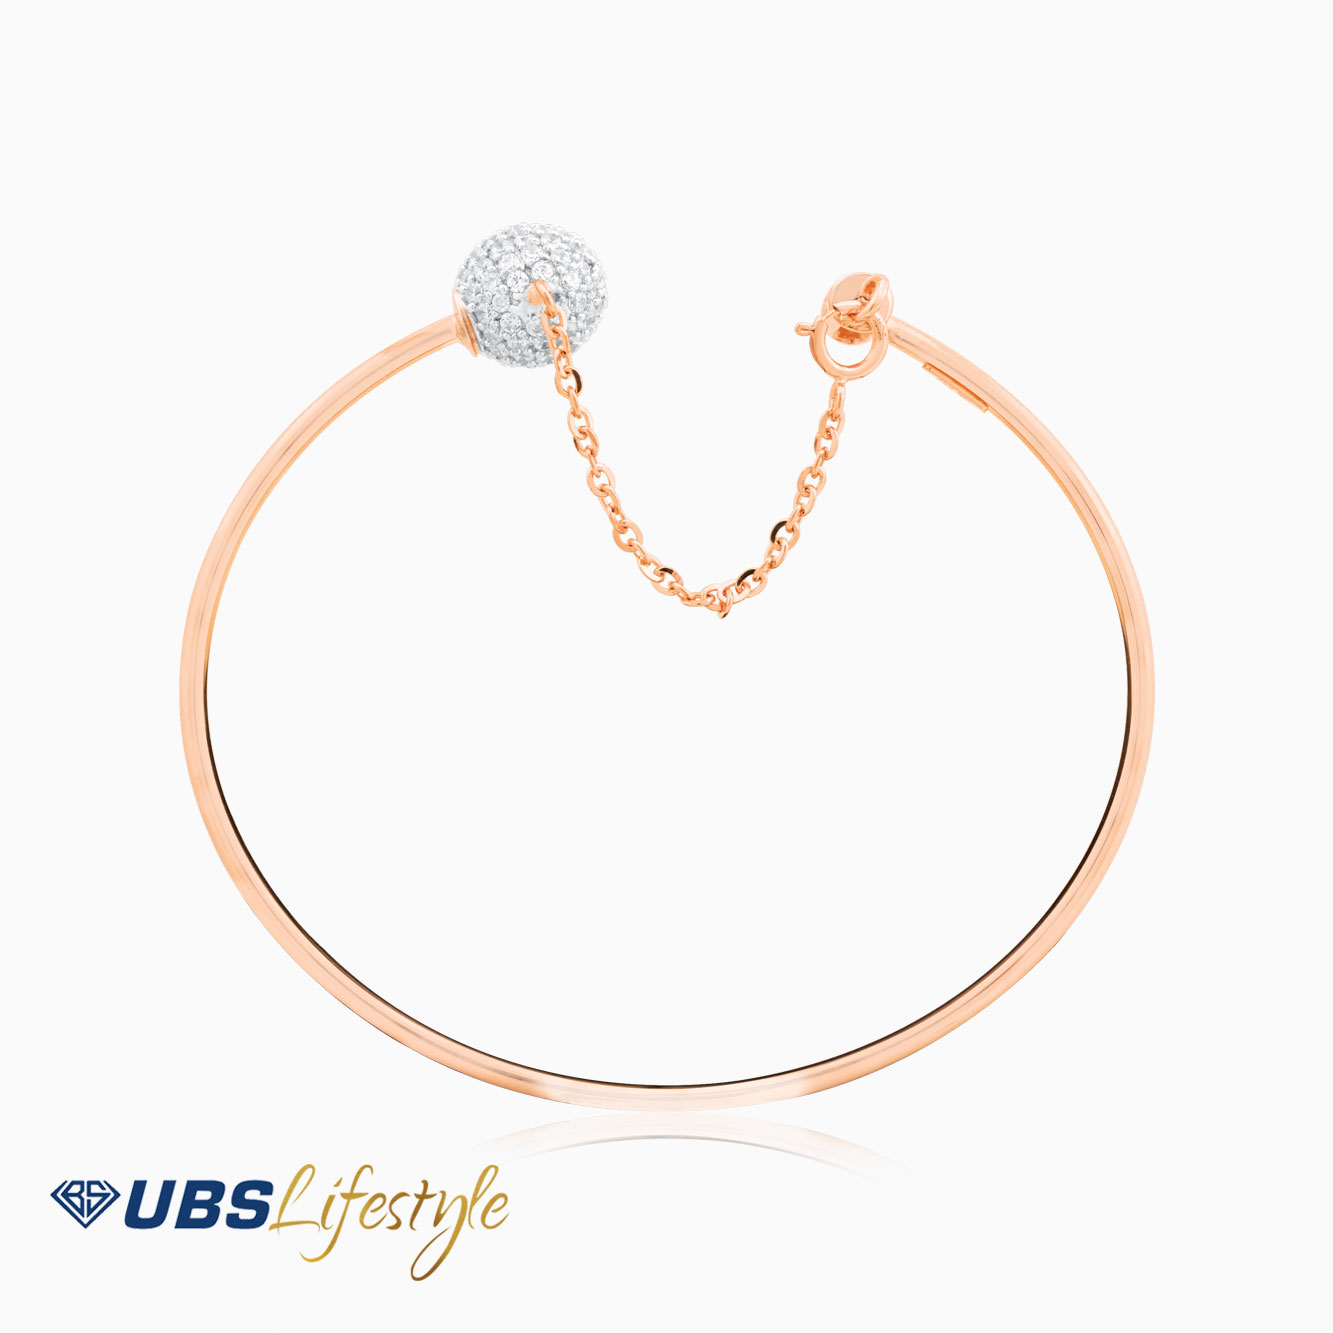  GELANG  EMAS  UBS UBSLifestyle Perhiasan Emas  Gold Jewelry 